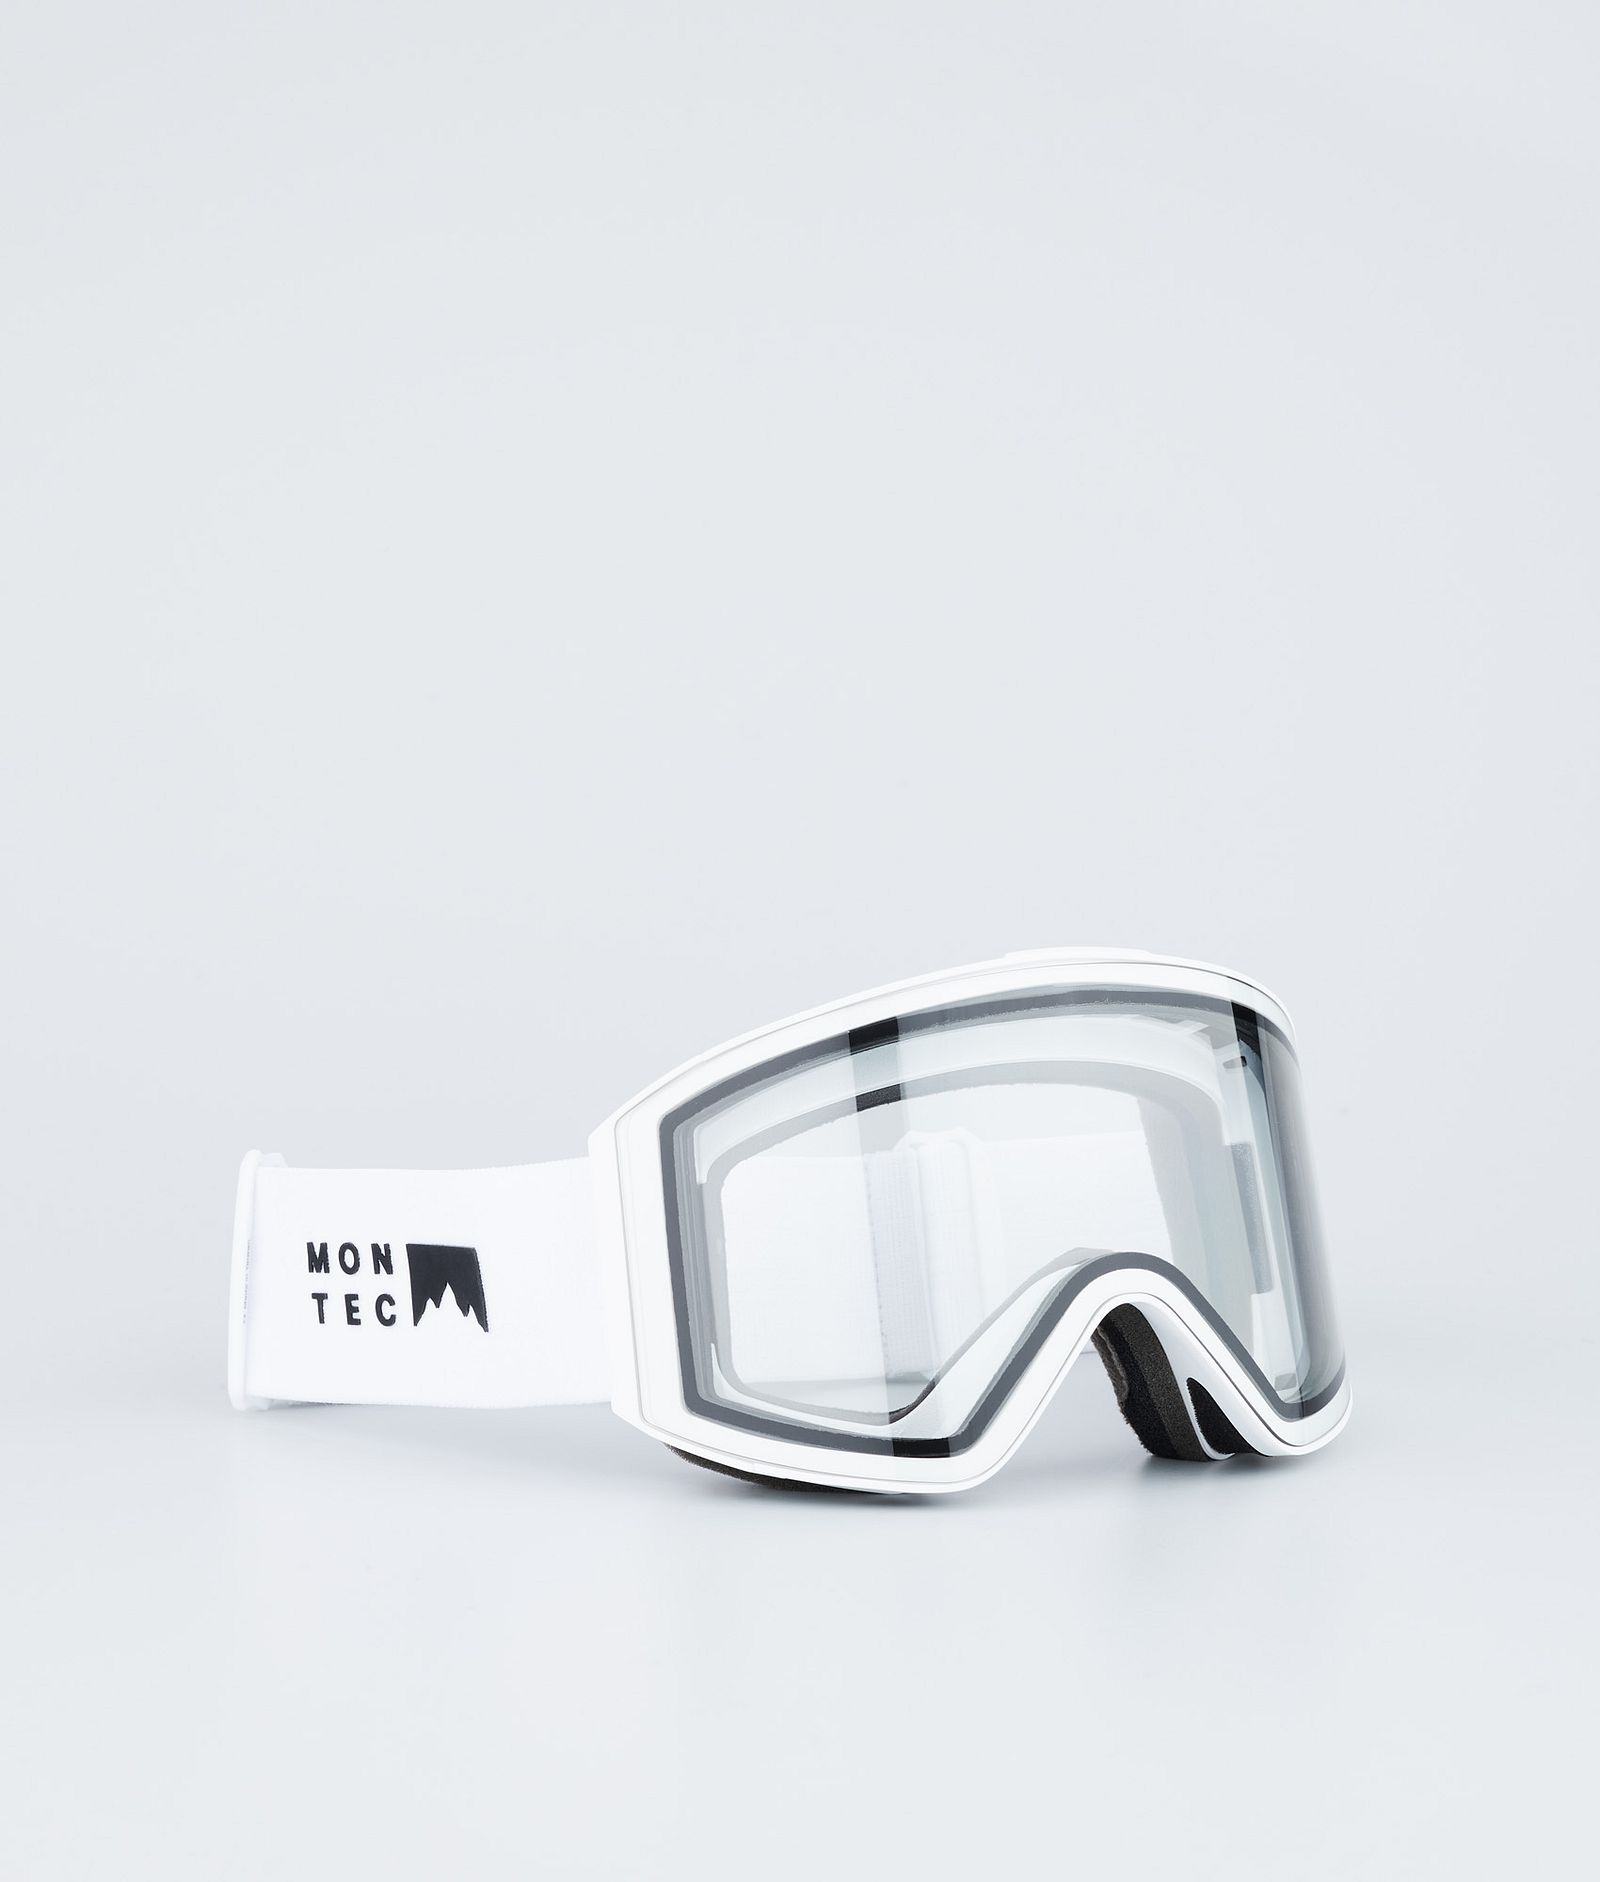 Scope Goggle Lens Lente de Repuesto Snow Clear